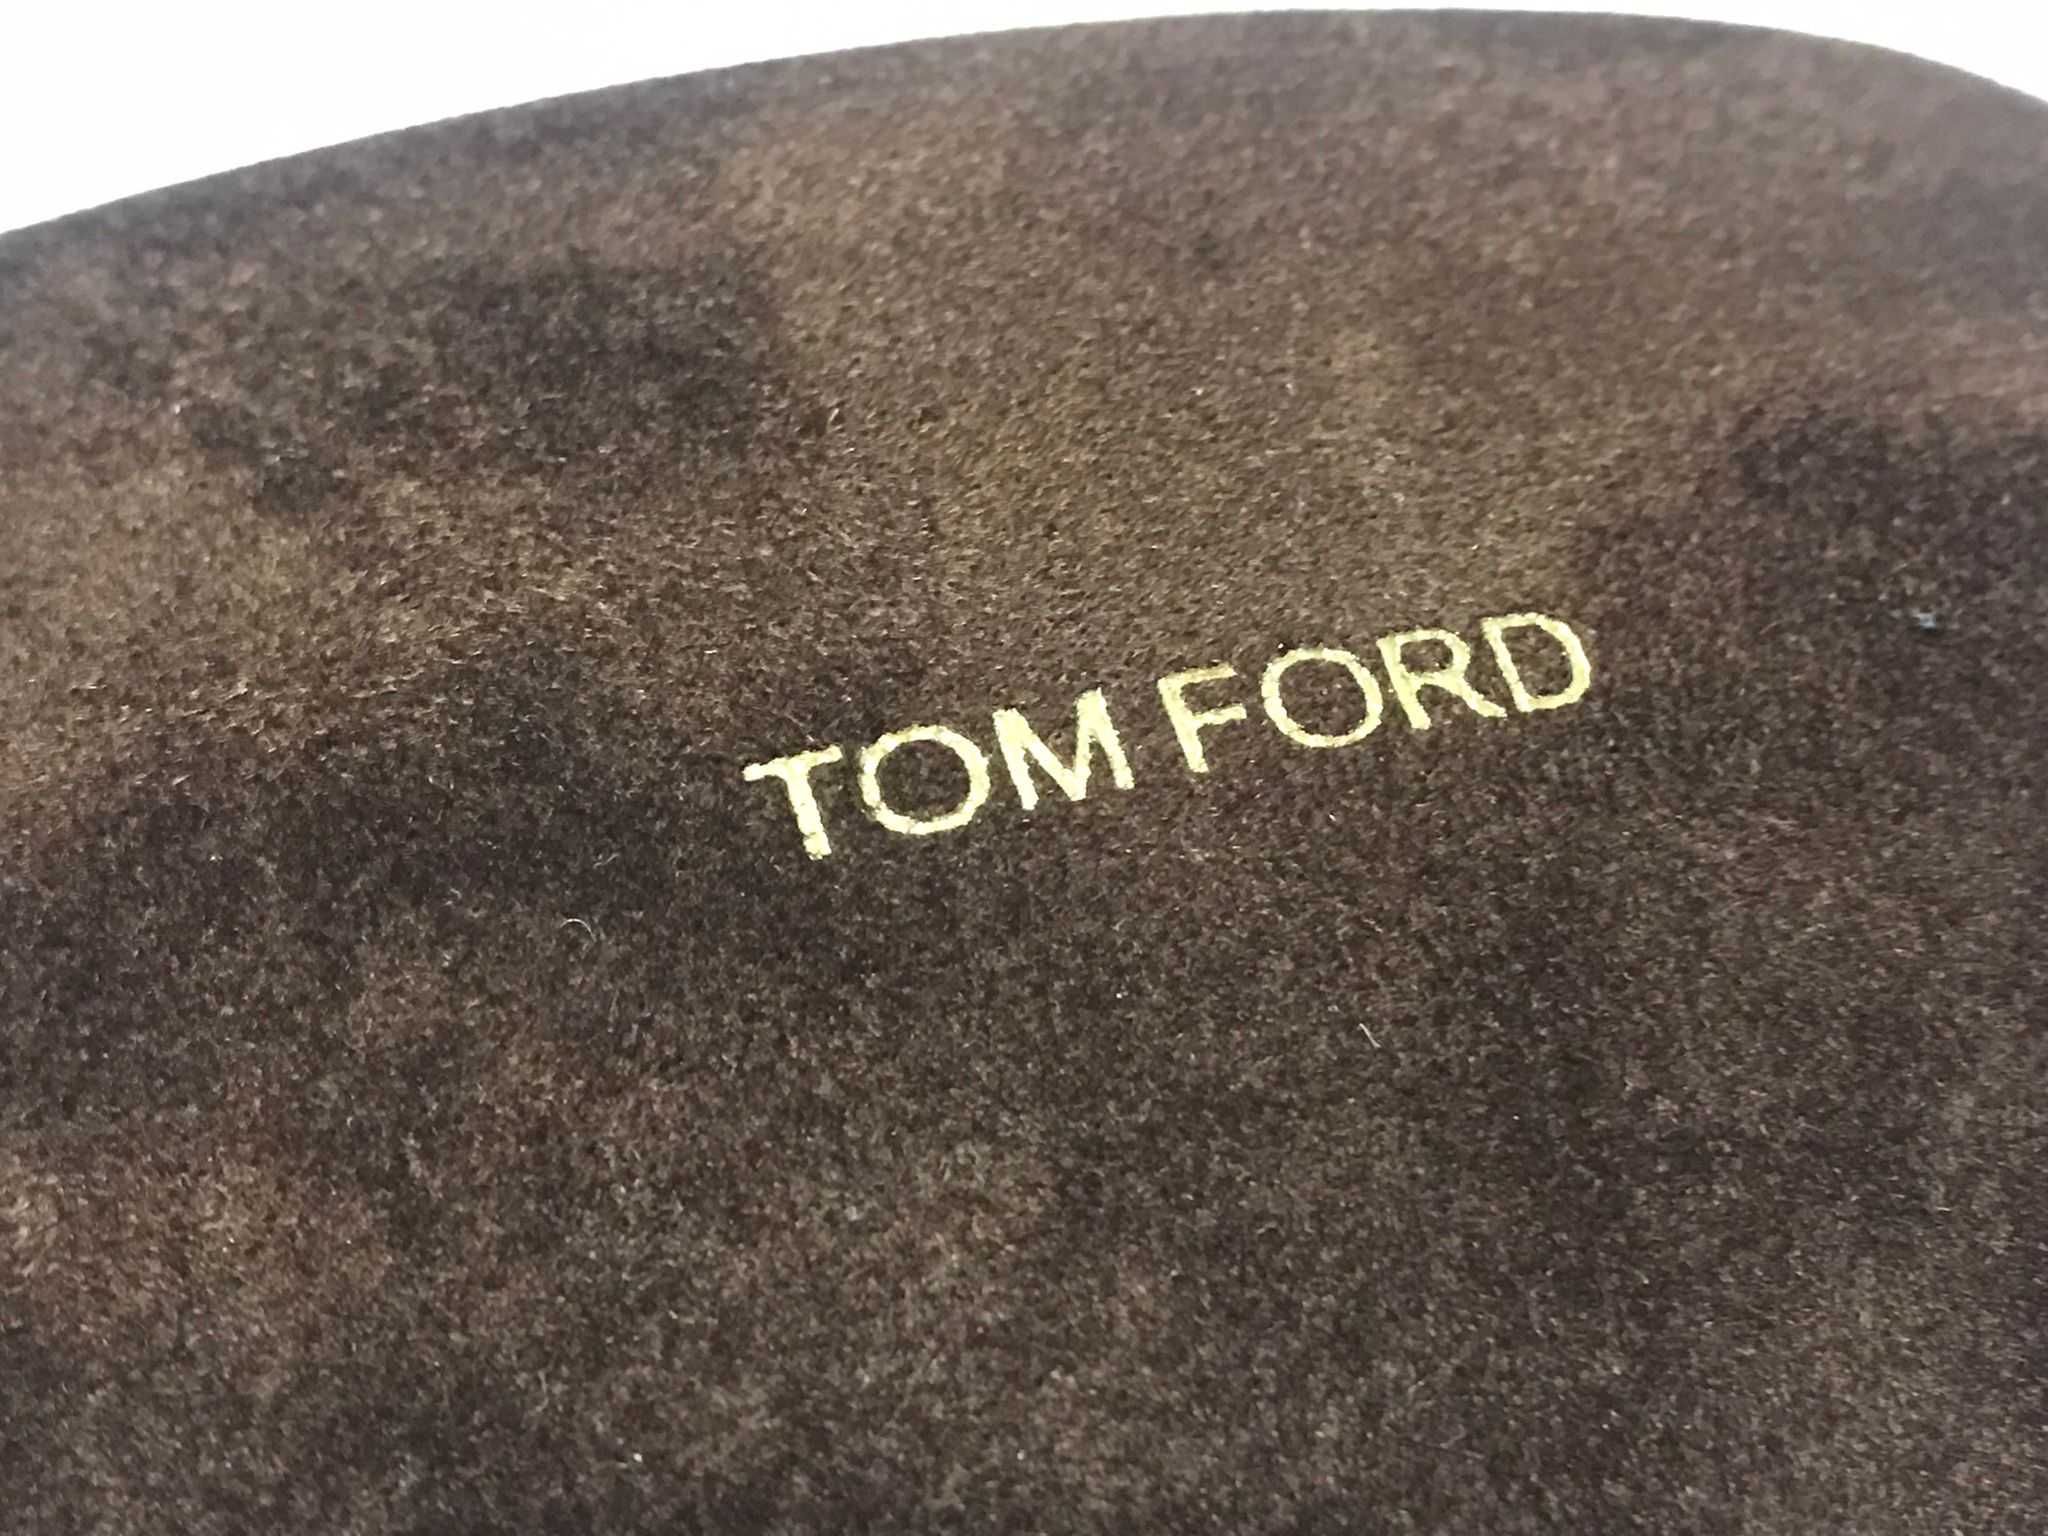 Toc Etui ochelari Tom Ford modelul mare